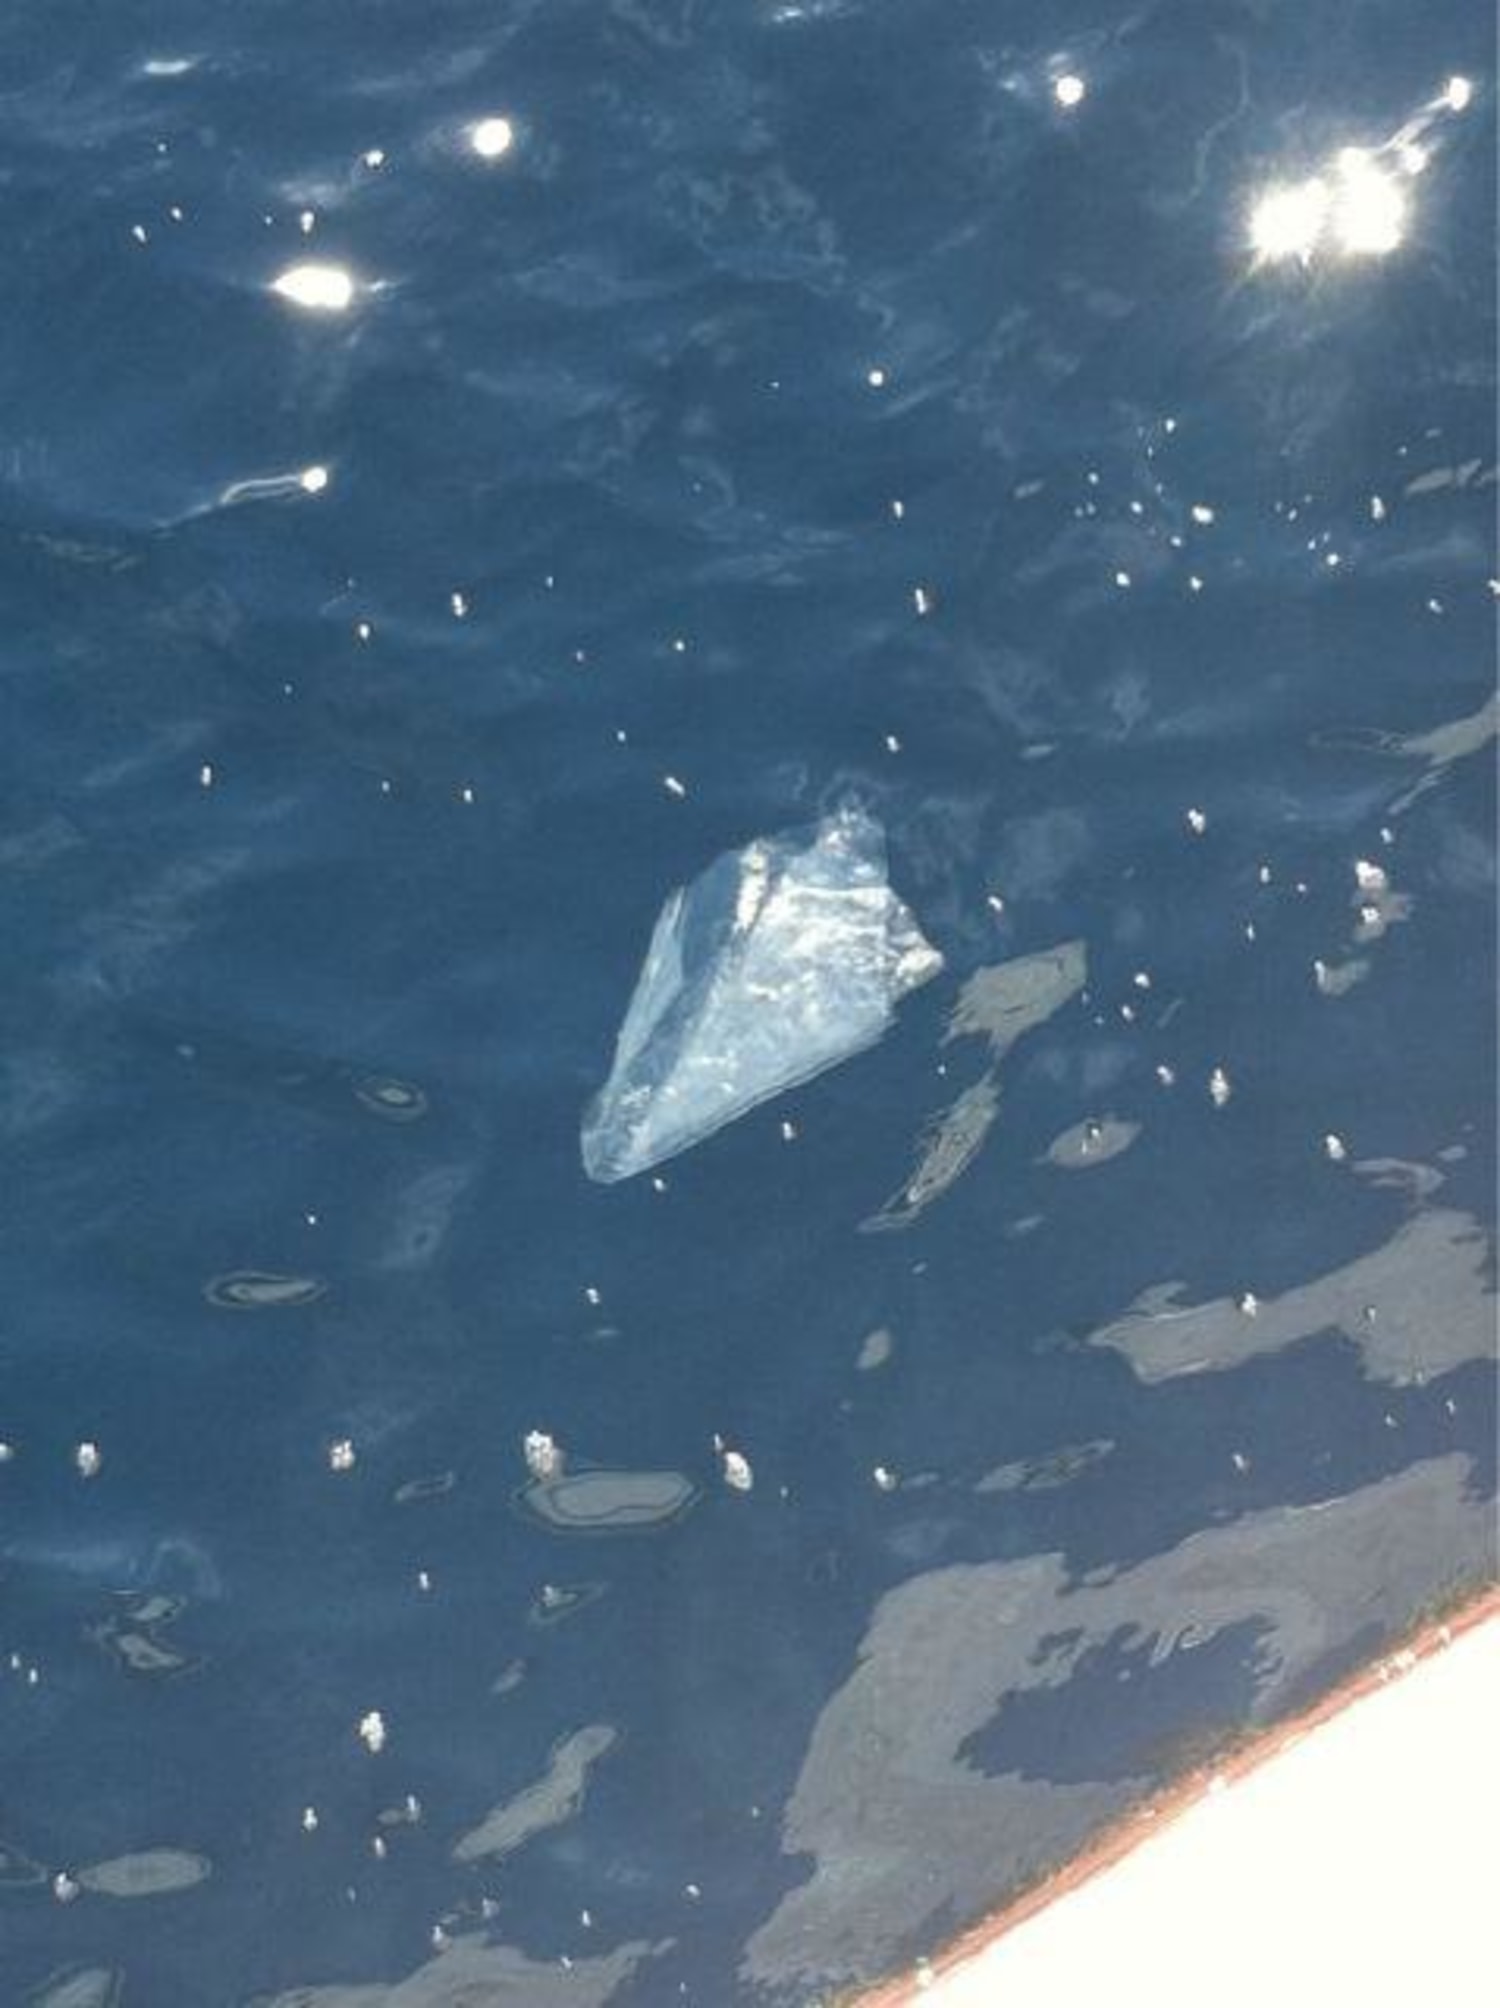 Plastic bag found floating near Titanic shipwreck